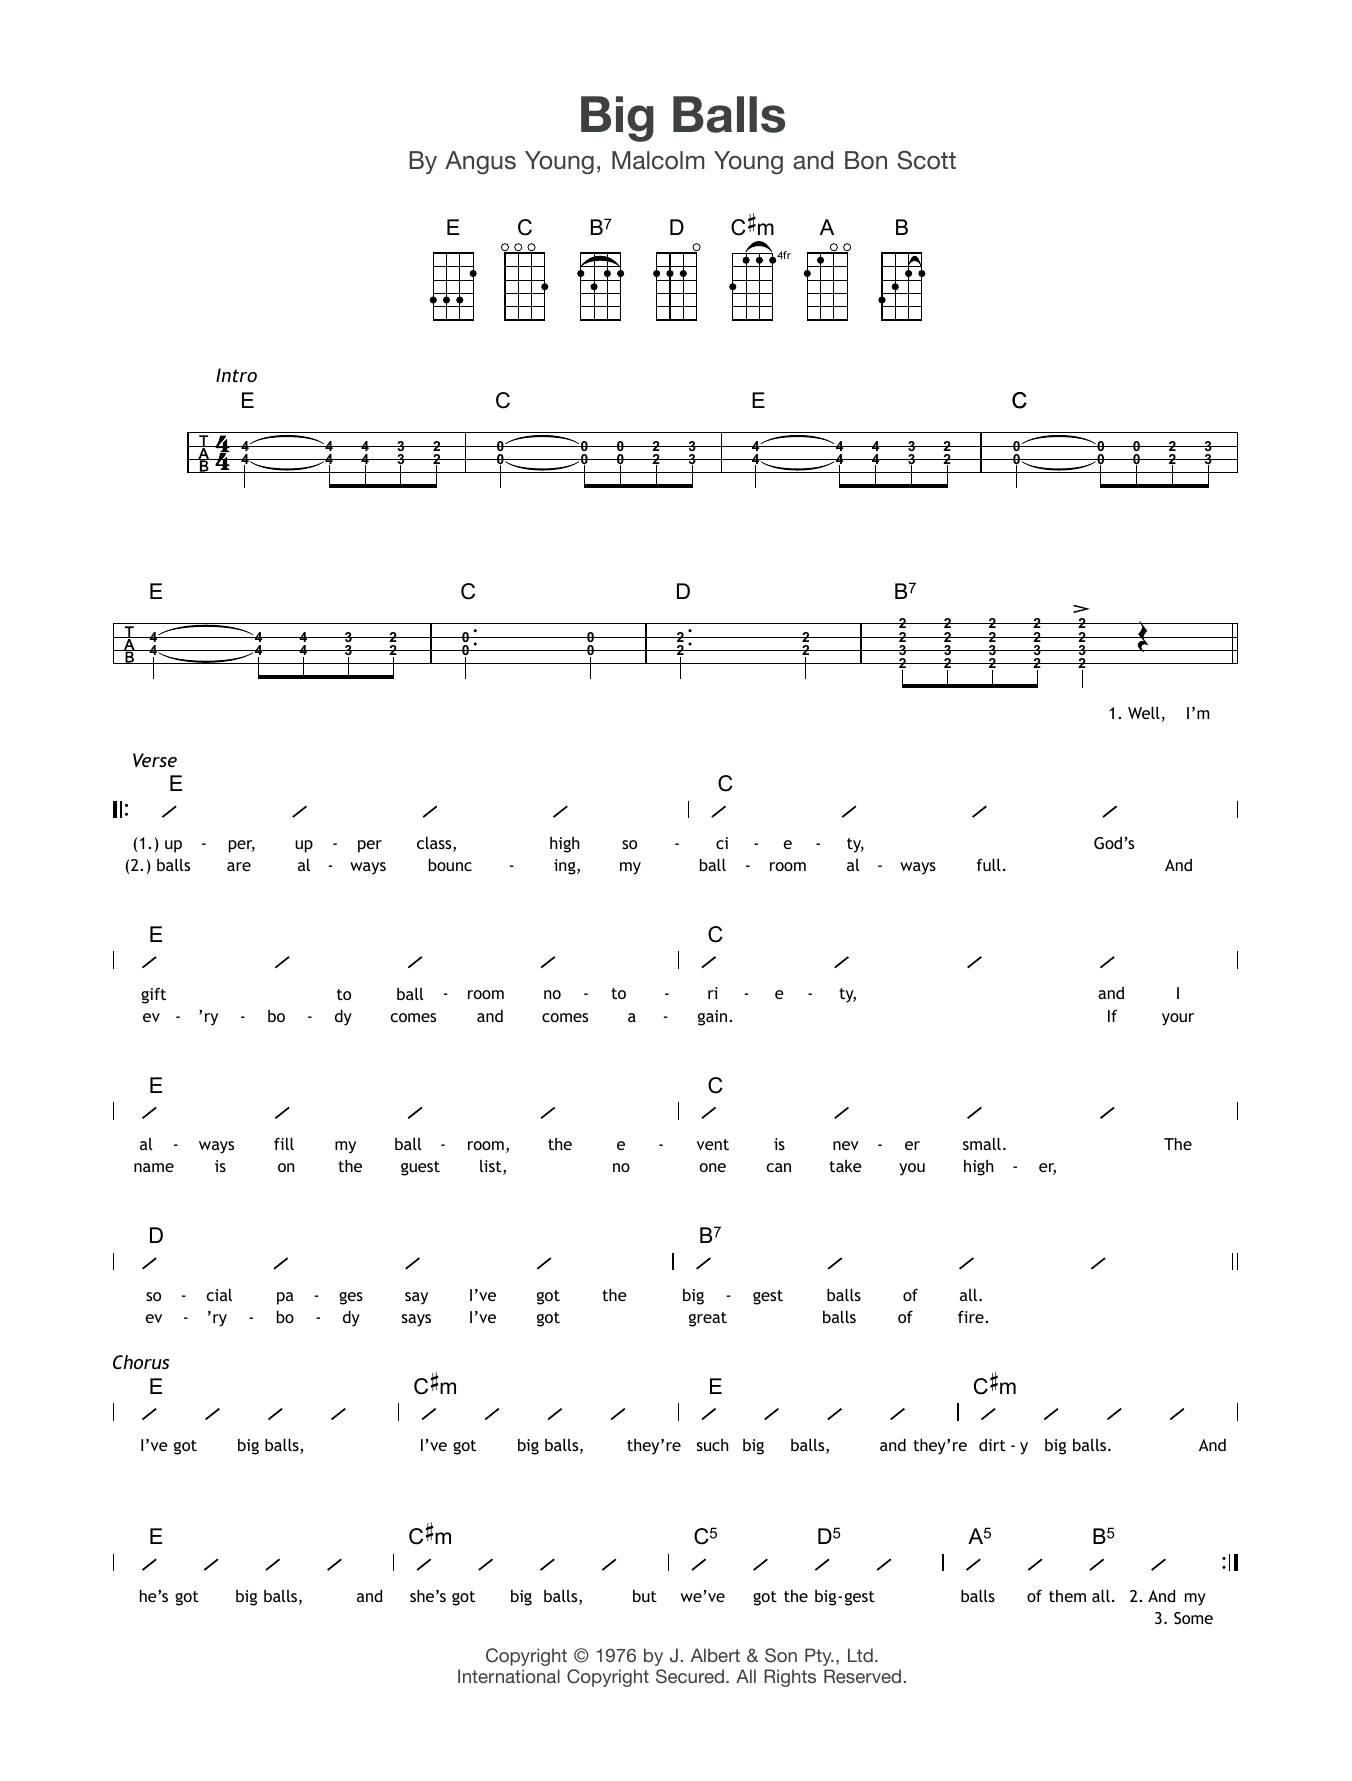 AC/DC Big Balls Sheet Music Notes & Chords for Ukulele with strumming patterns - Download or Print PDF